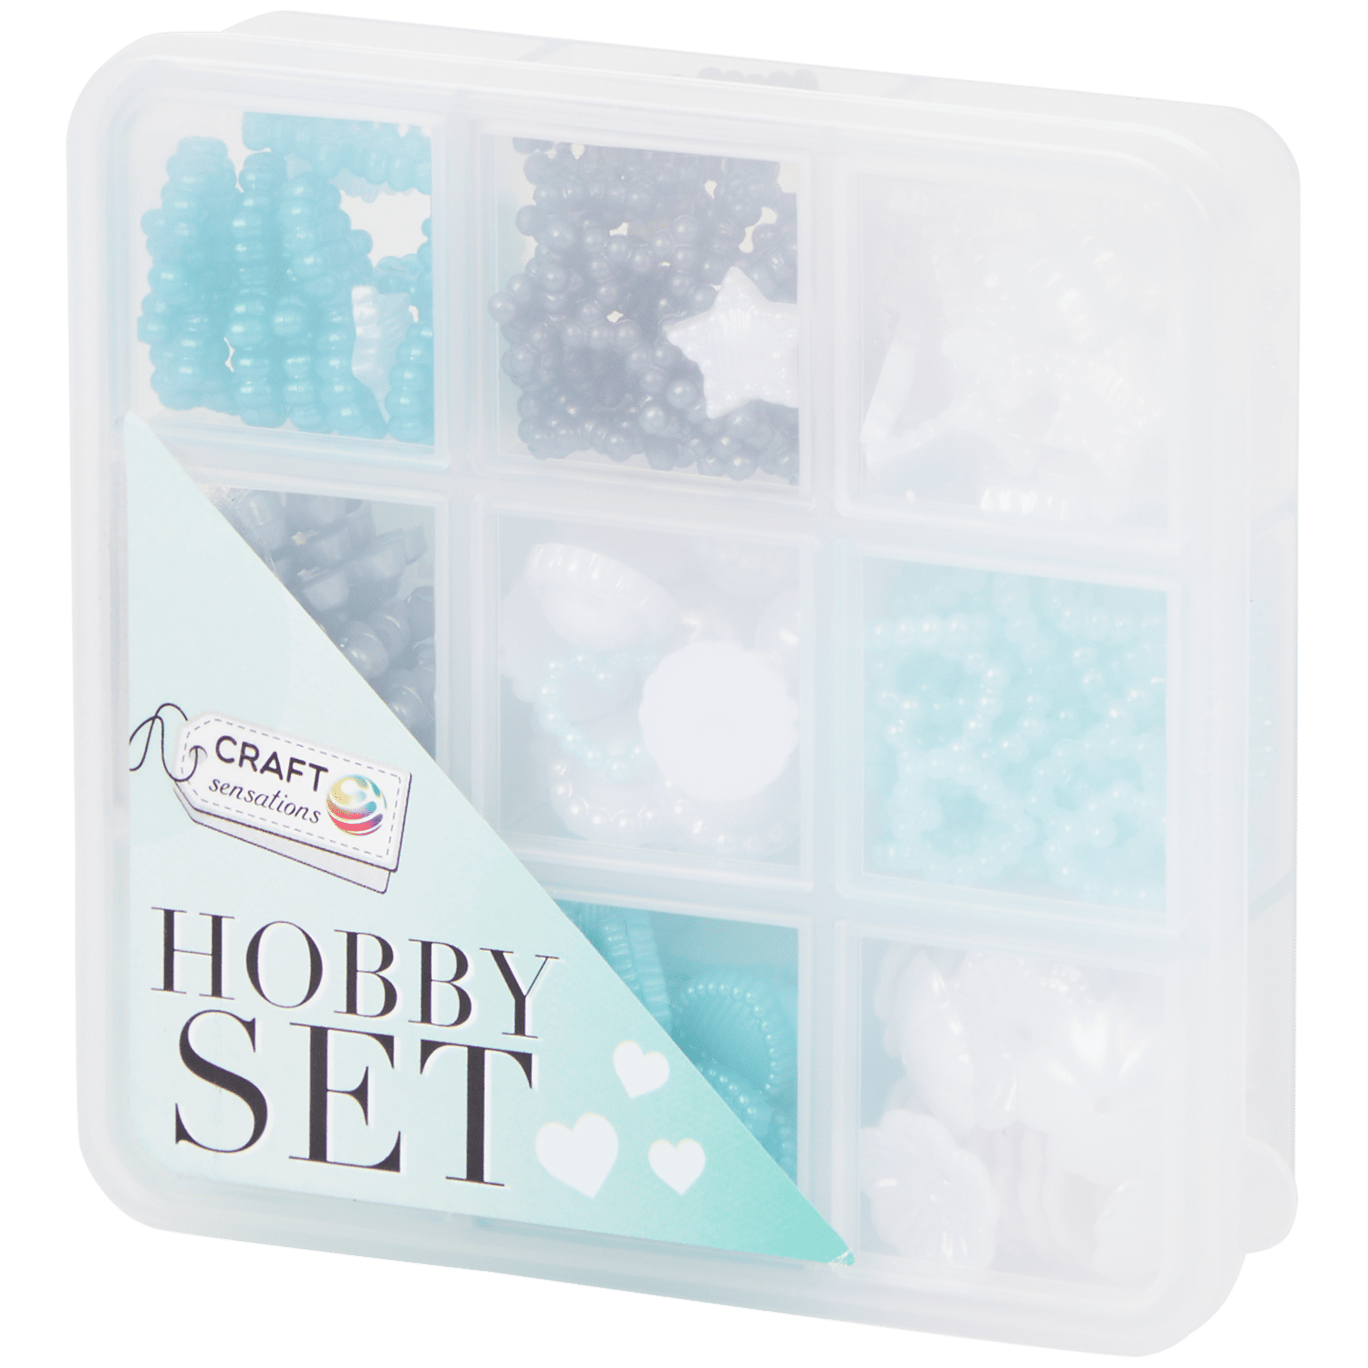 Craft Sensations hobbybox